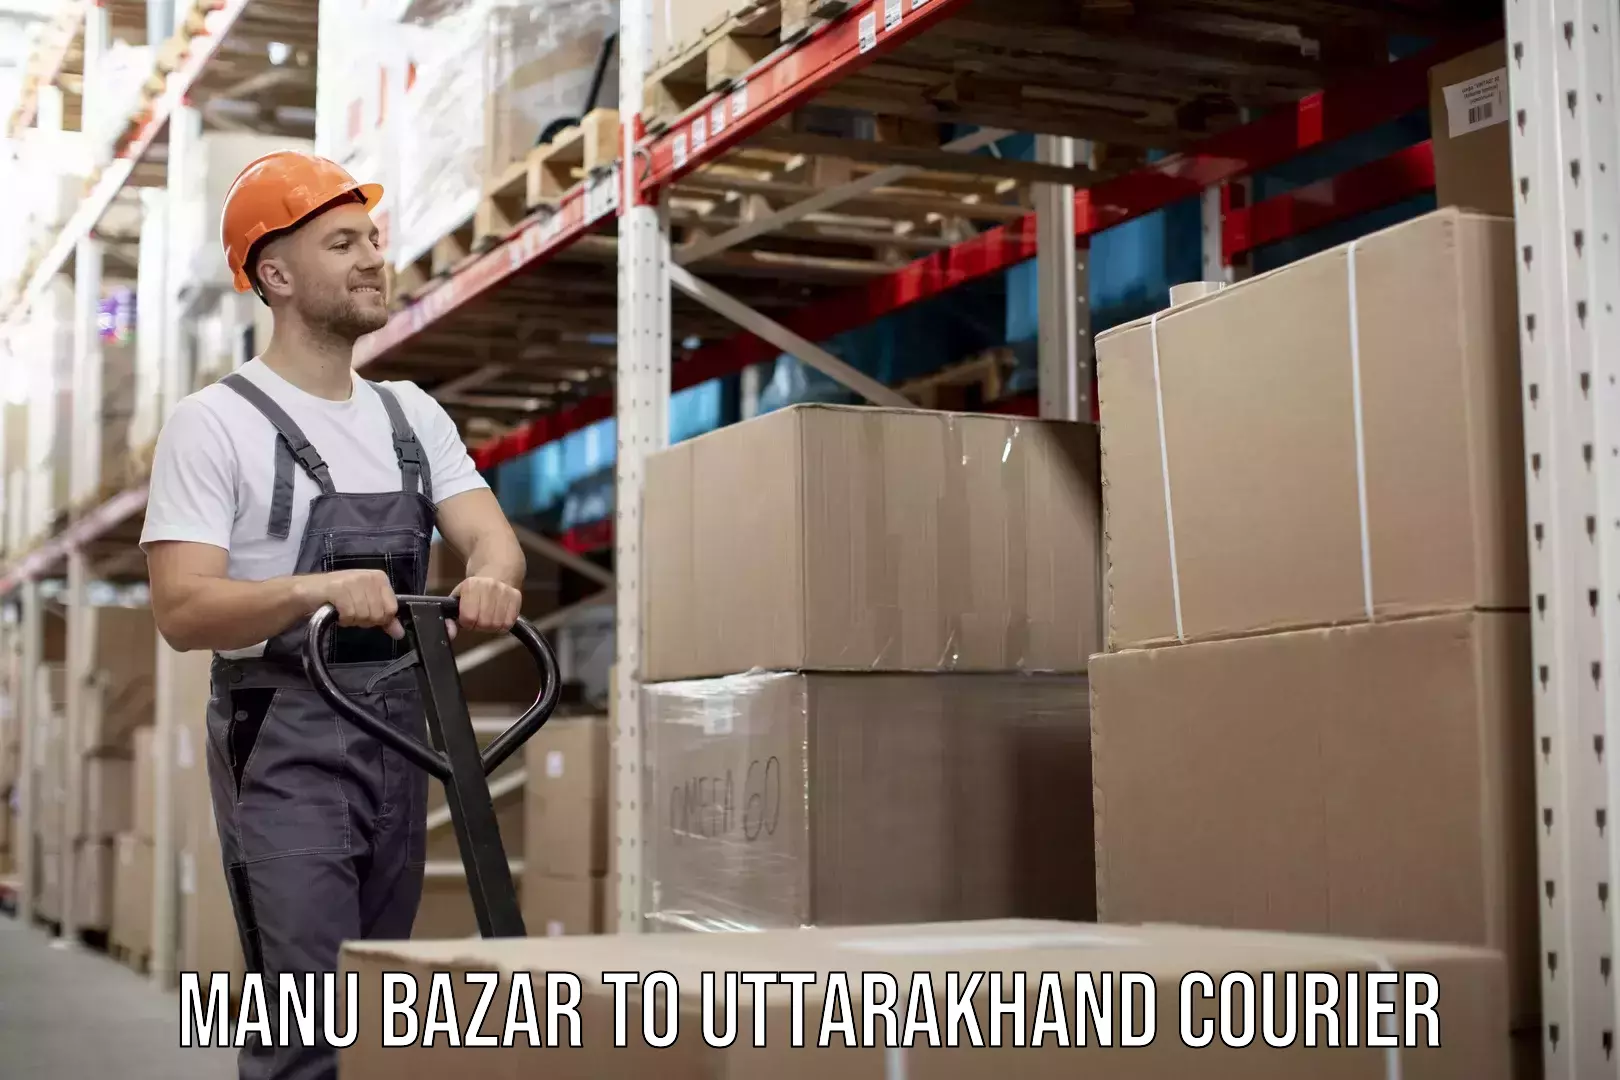 24/7 courier service Manu Bazar to Uttarakhand